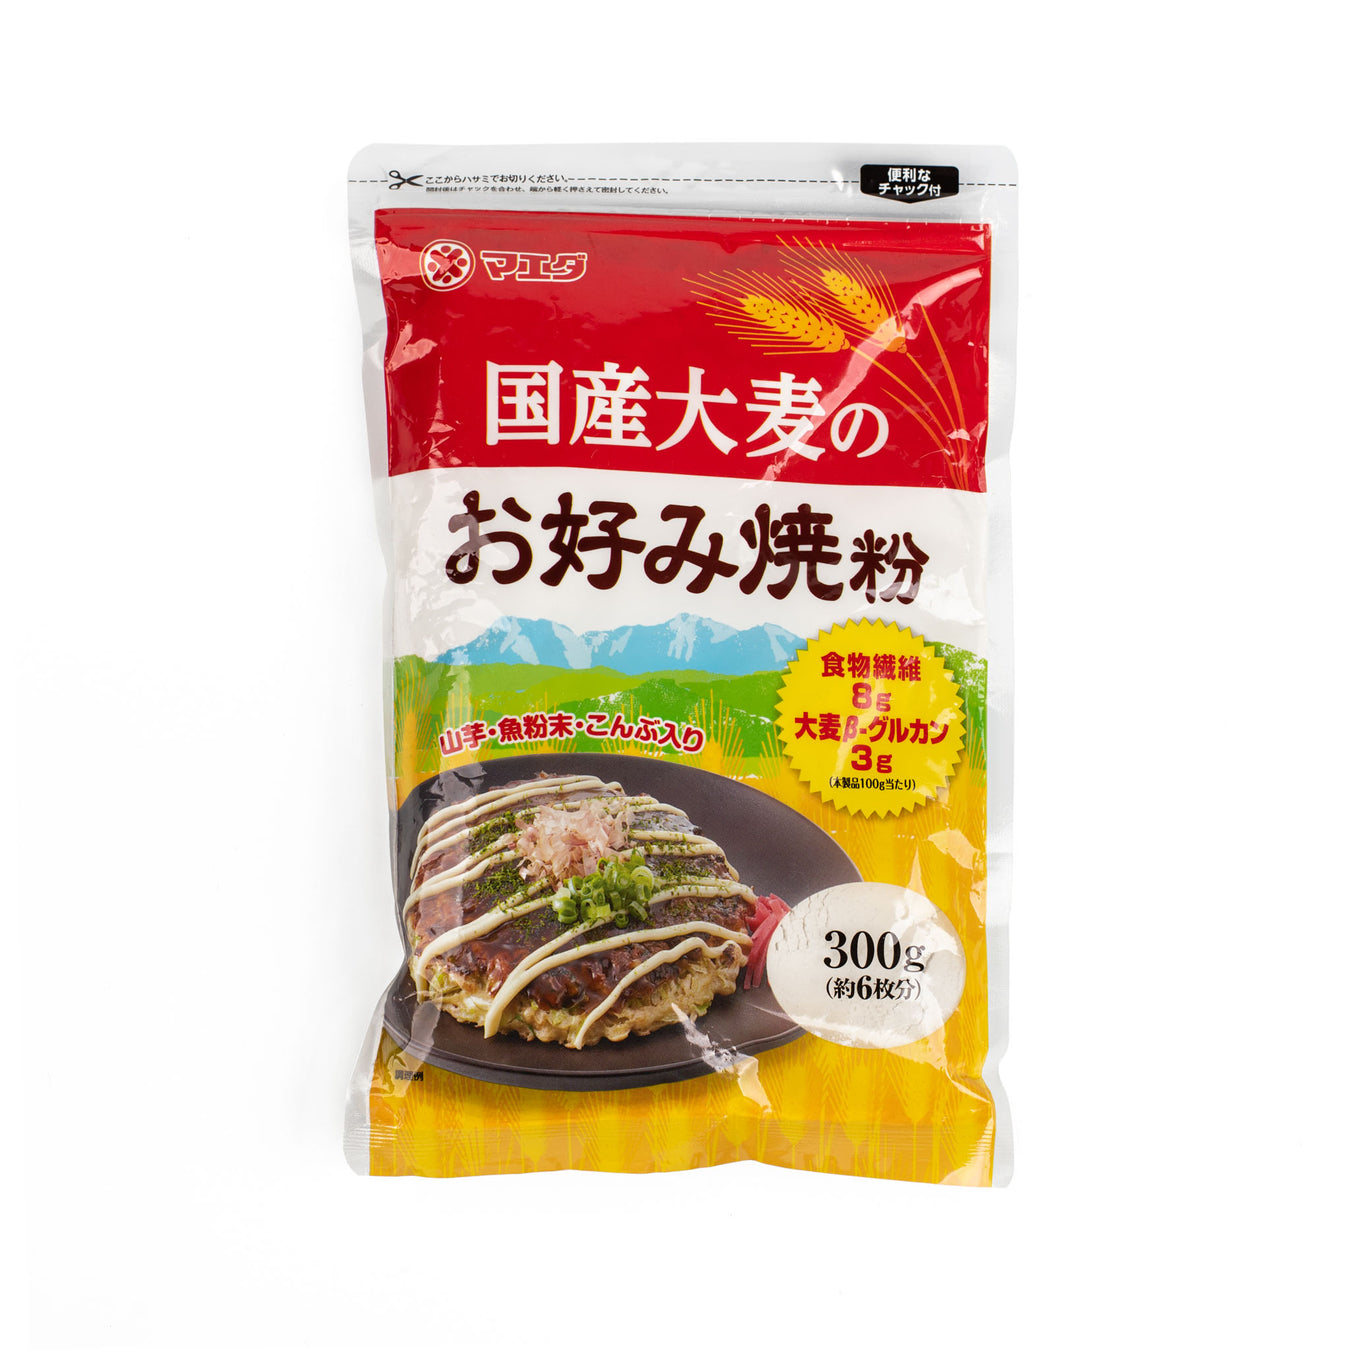 Okonomiyaki Essentials